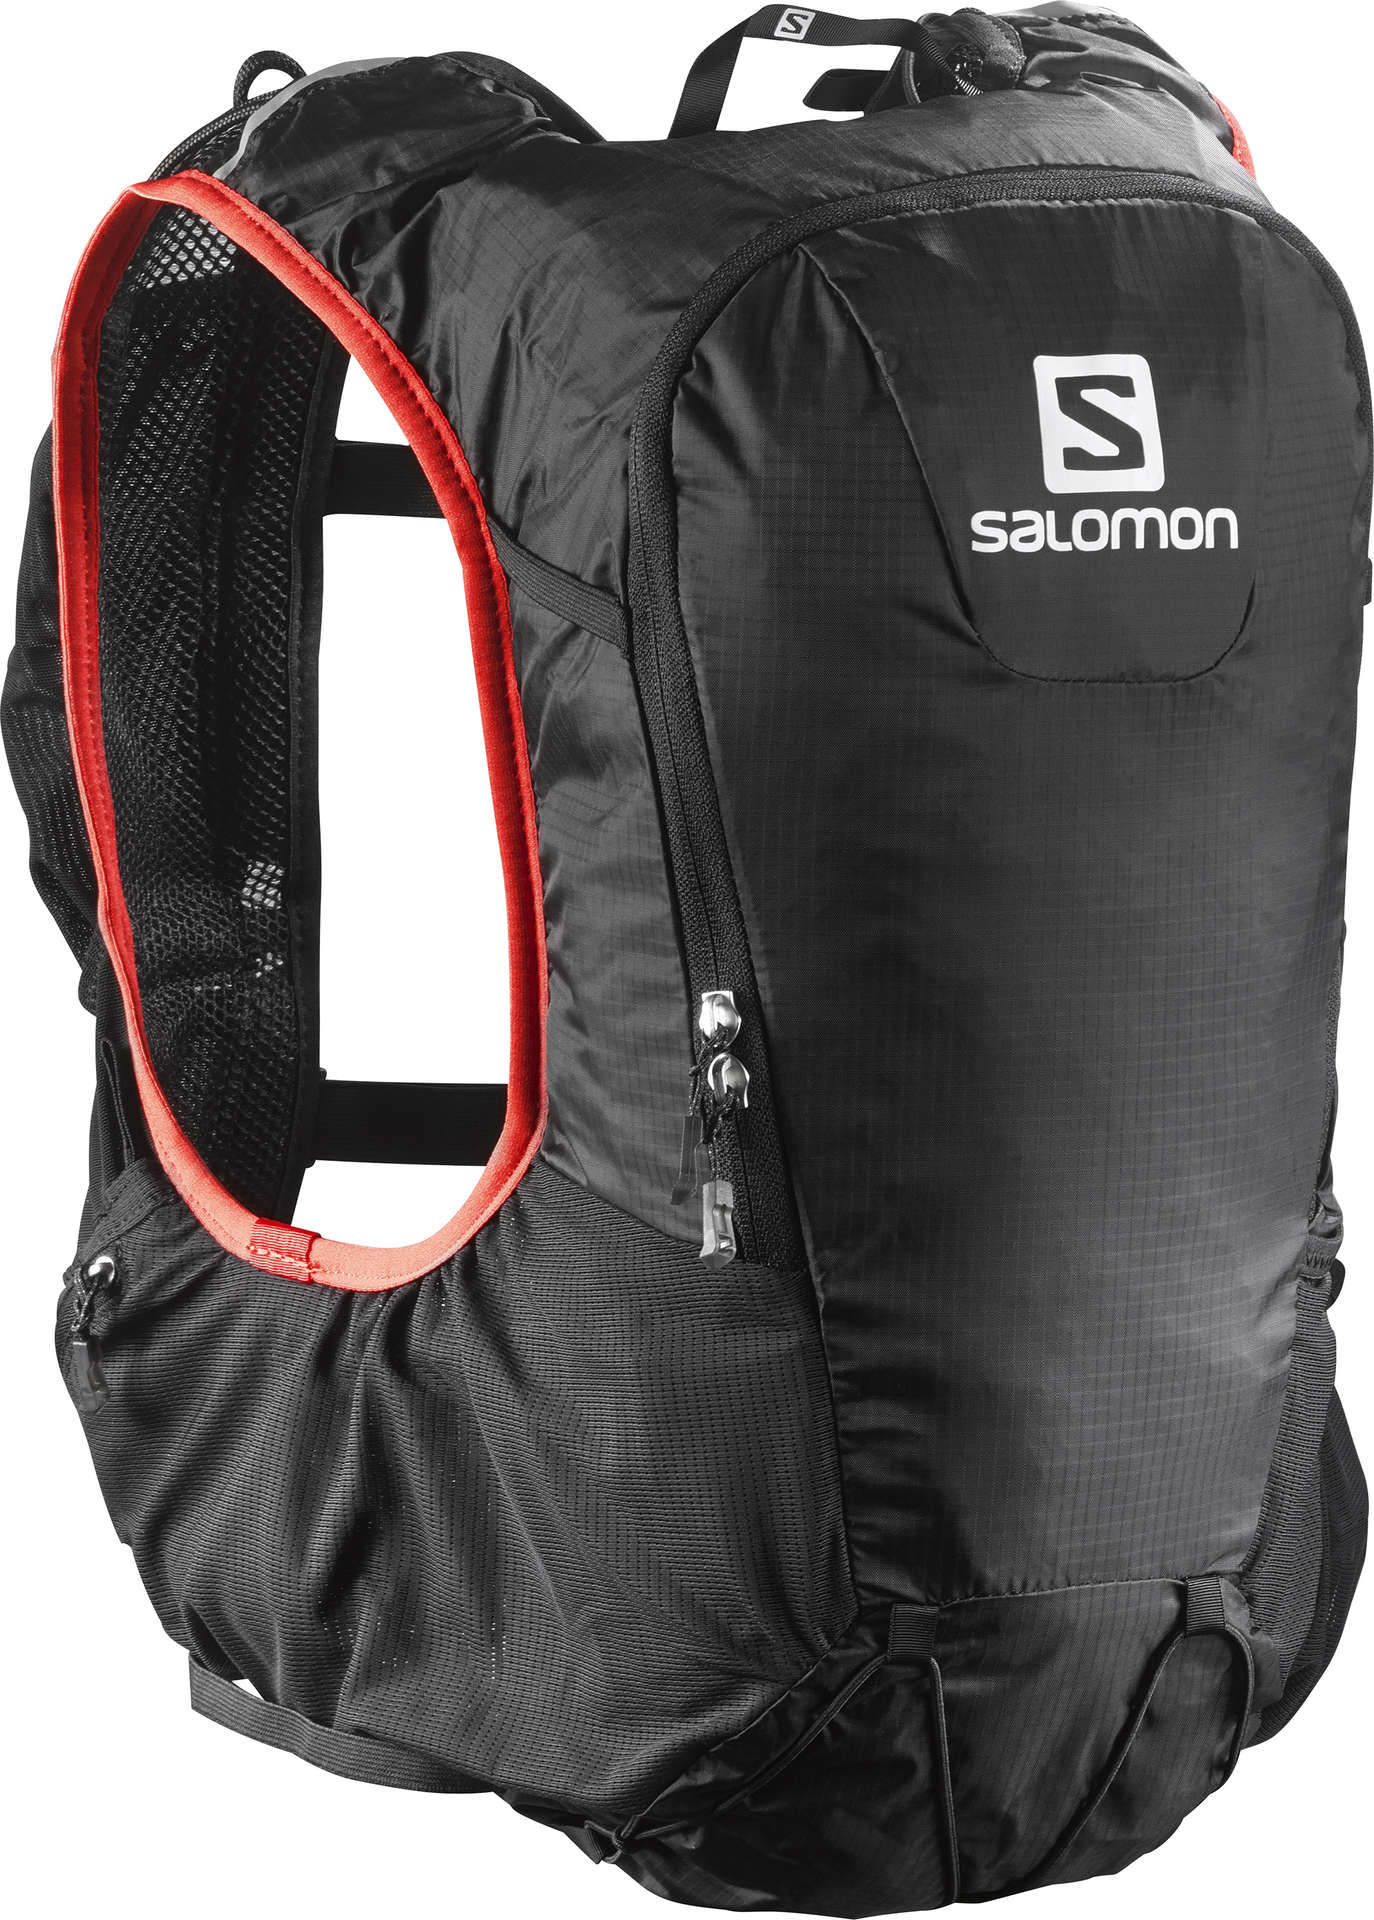 Salomon Skin Pro 10 Rugzak Zwart/Rood